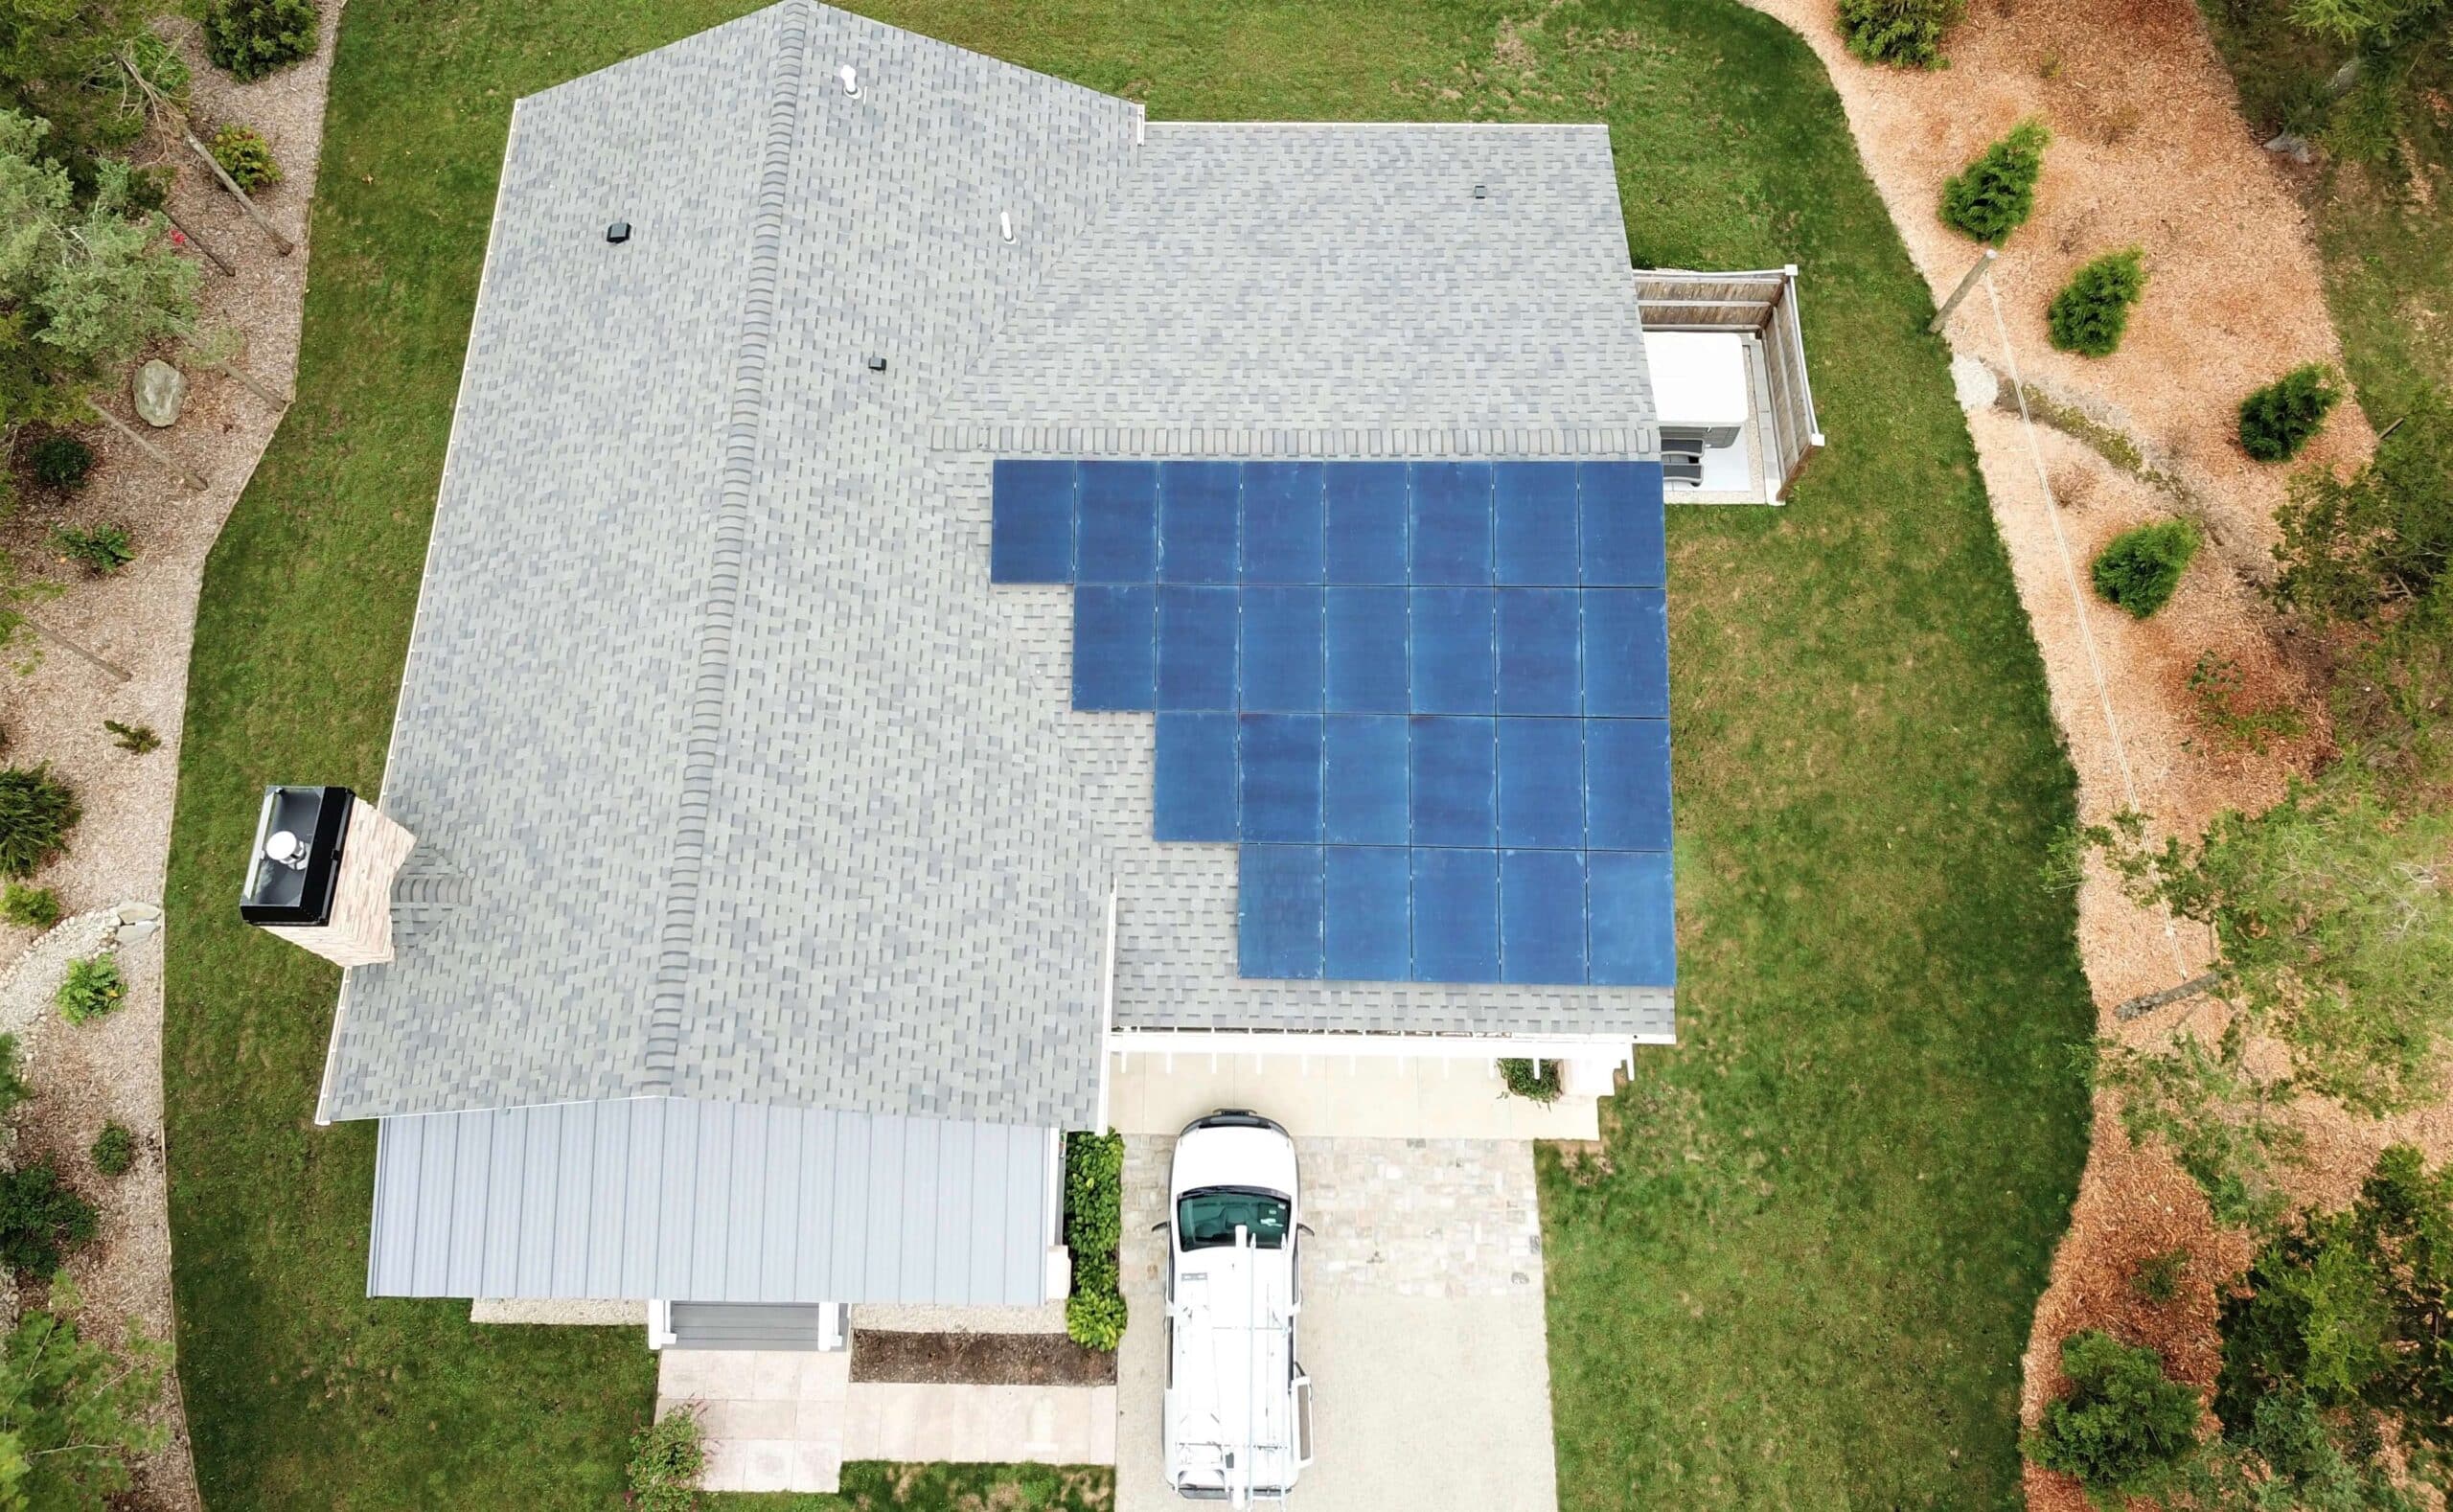 westport massachusetts south coast residential solar installation my generation energy